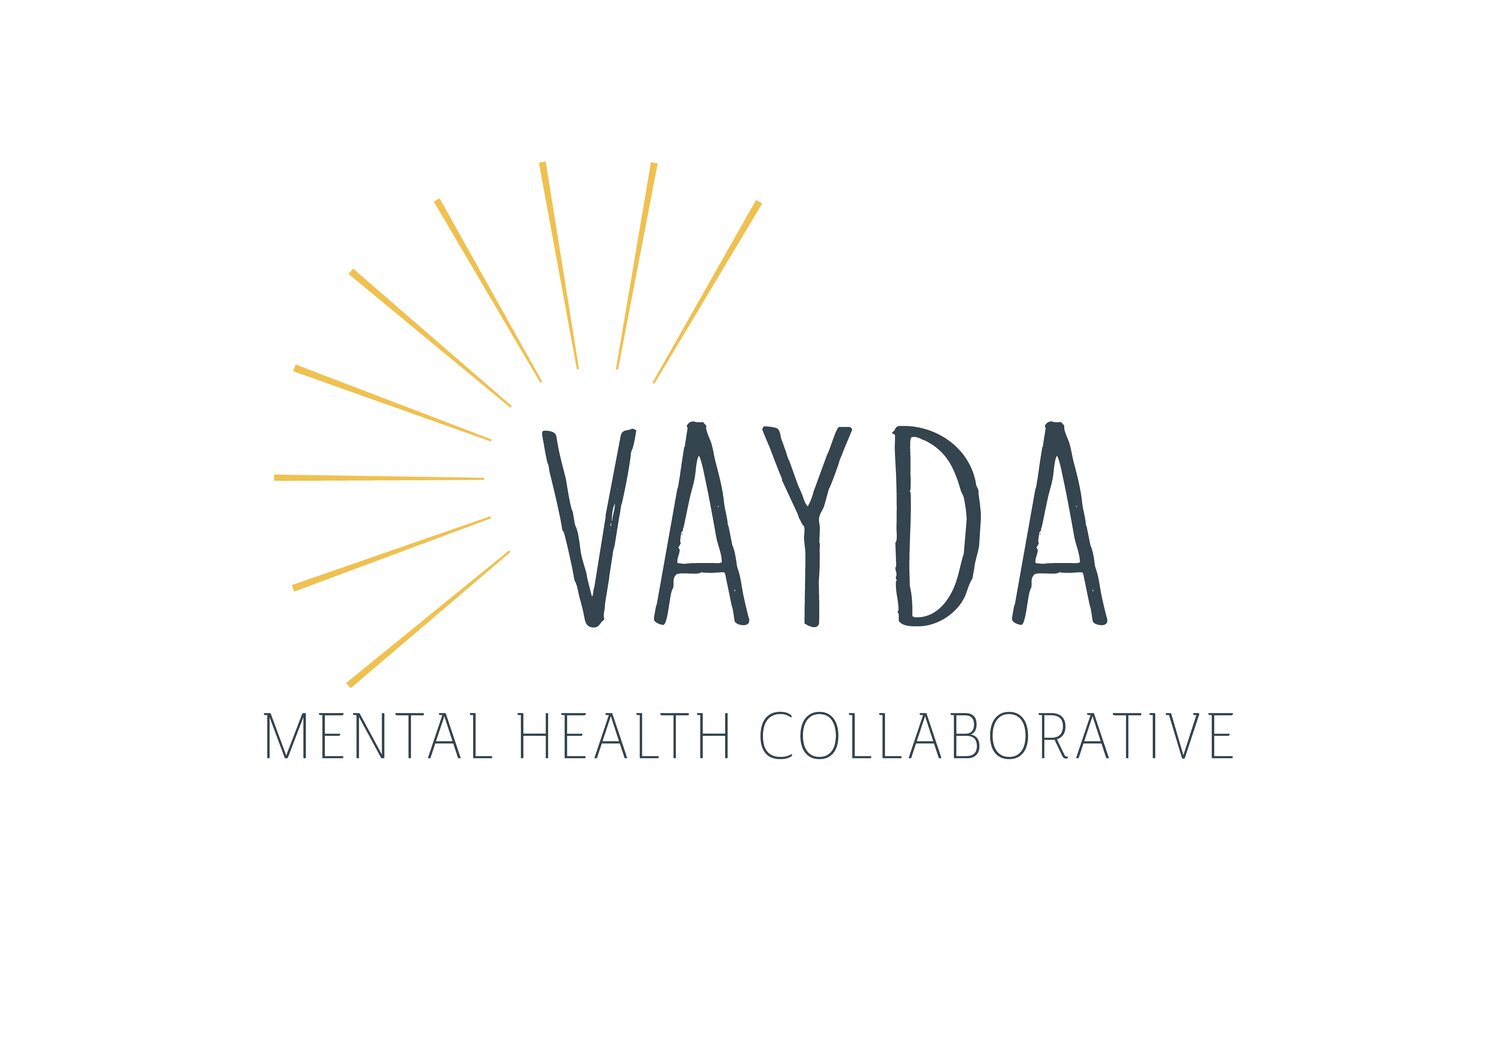 Vayda Mental Health Collaborative